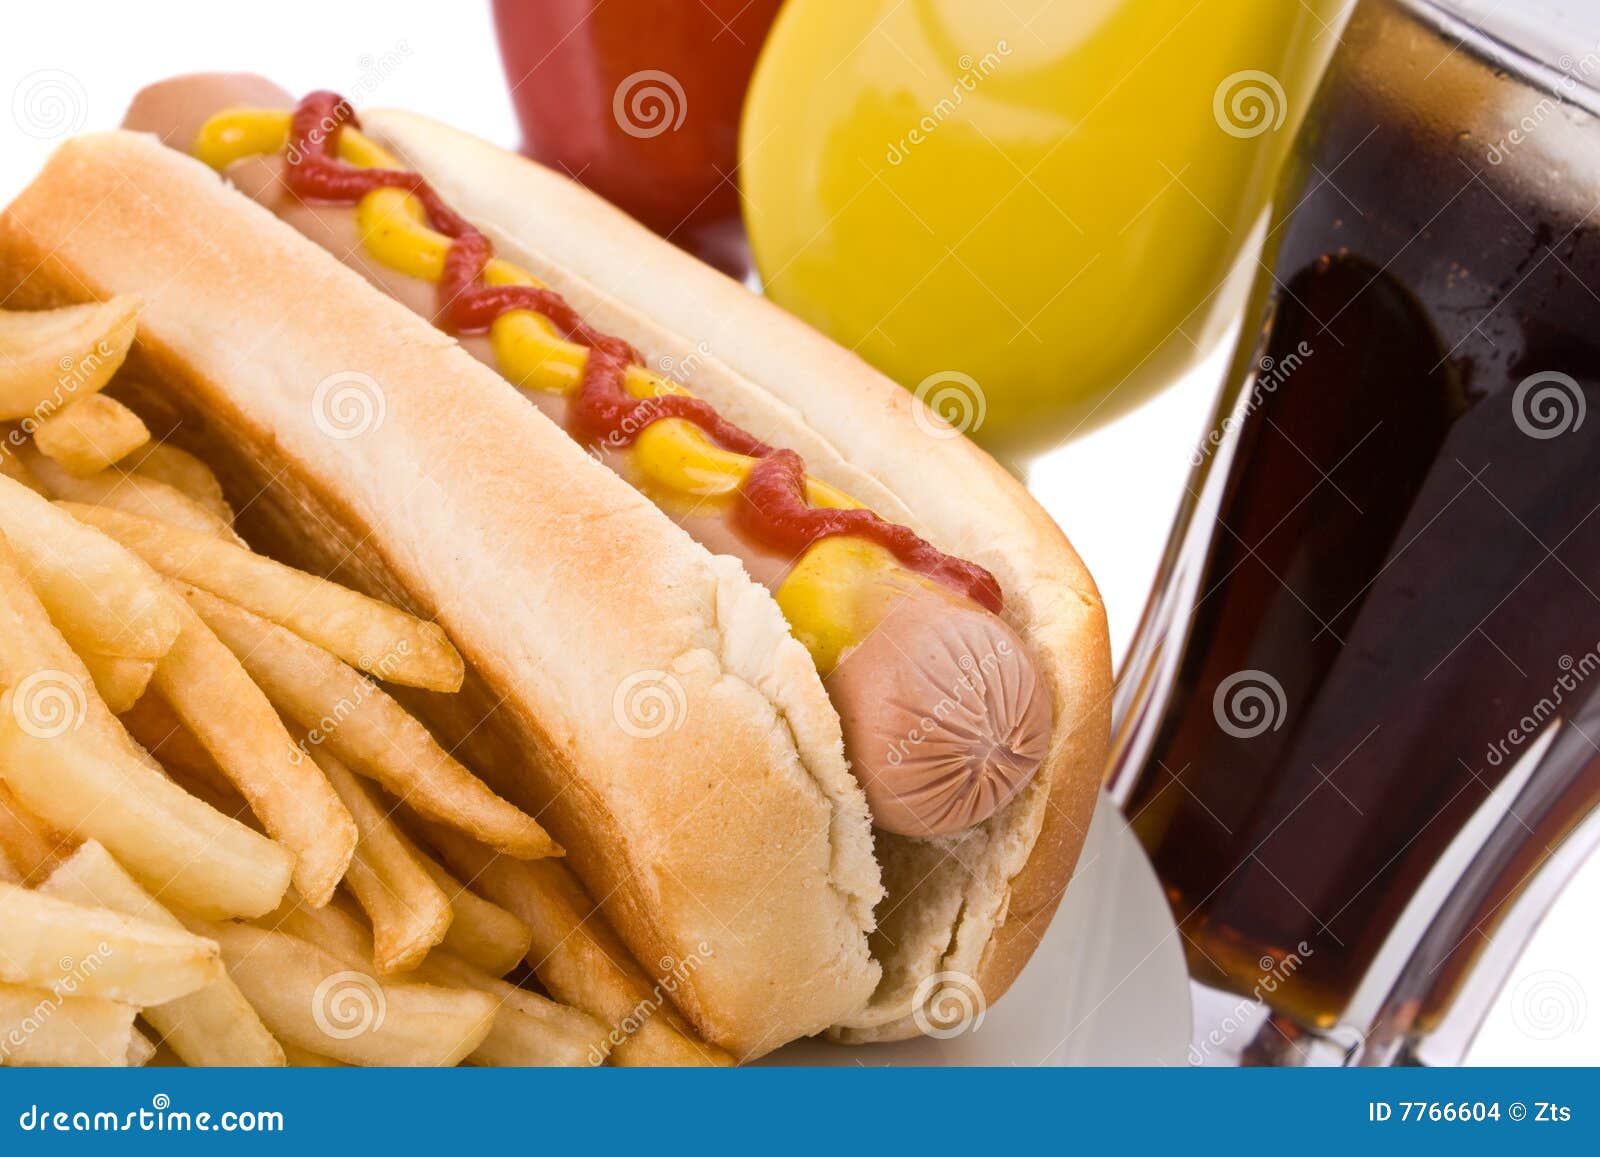 fast food meal with hotdog